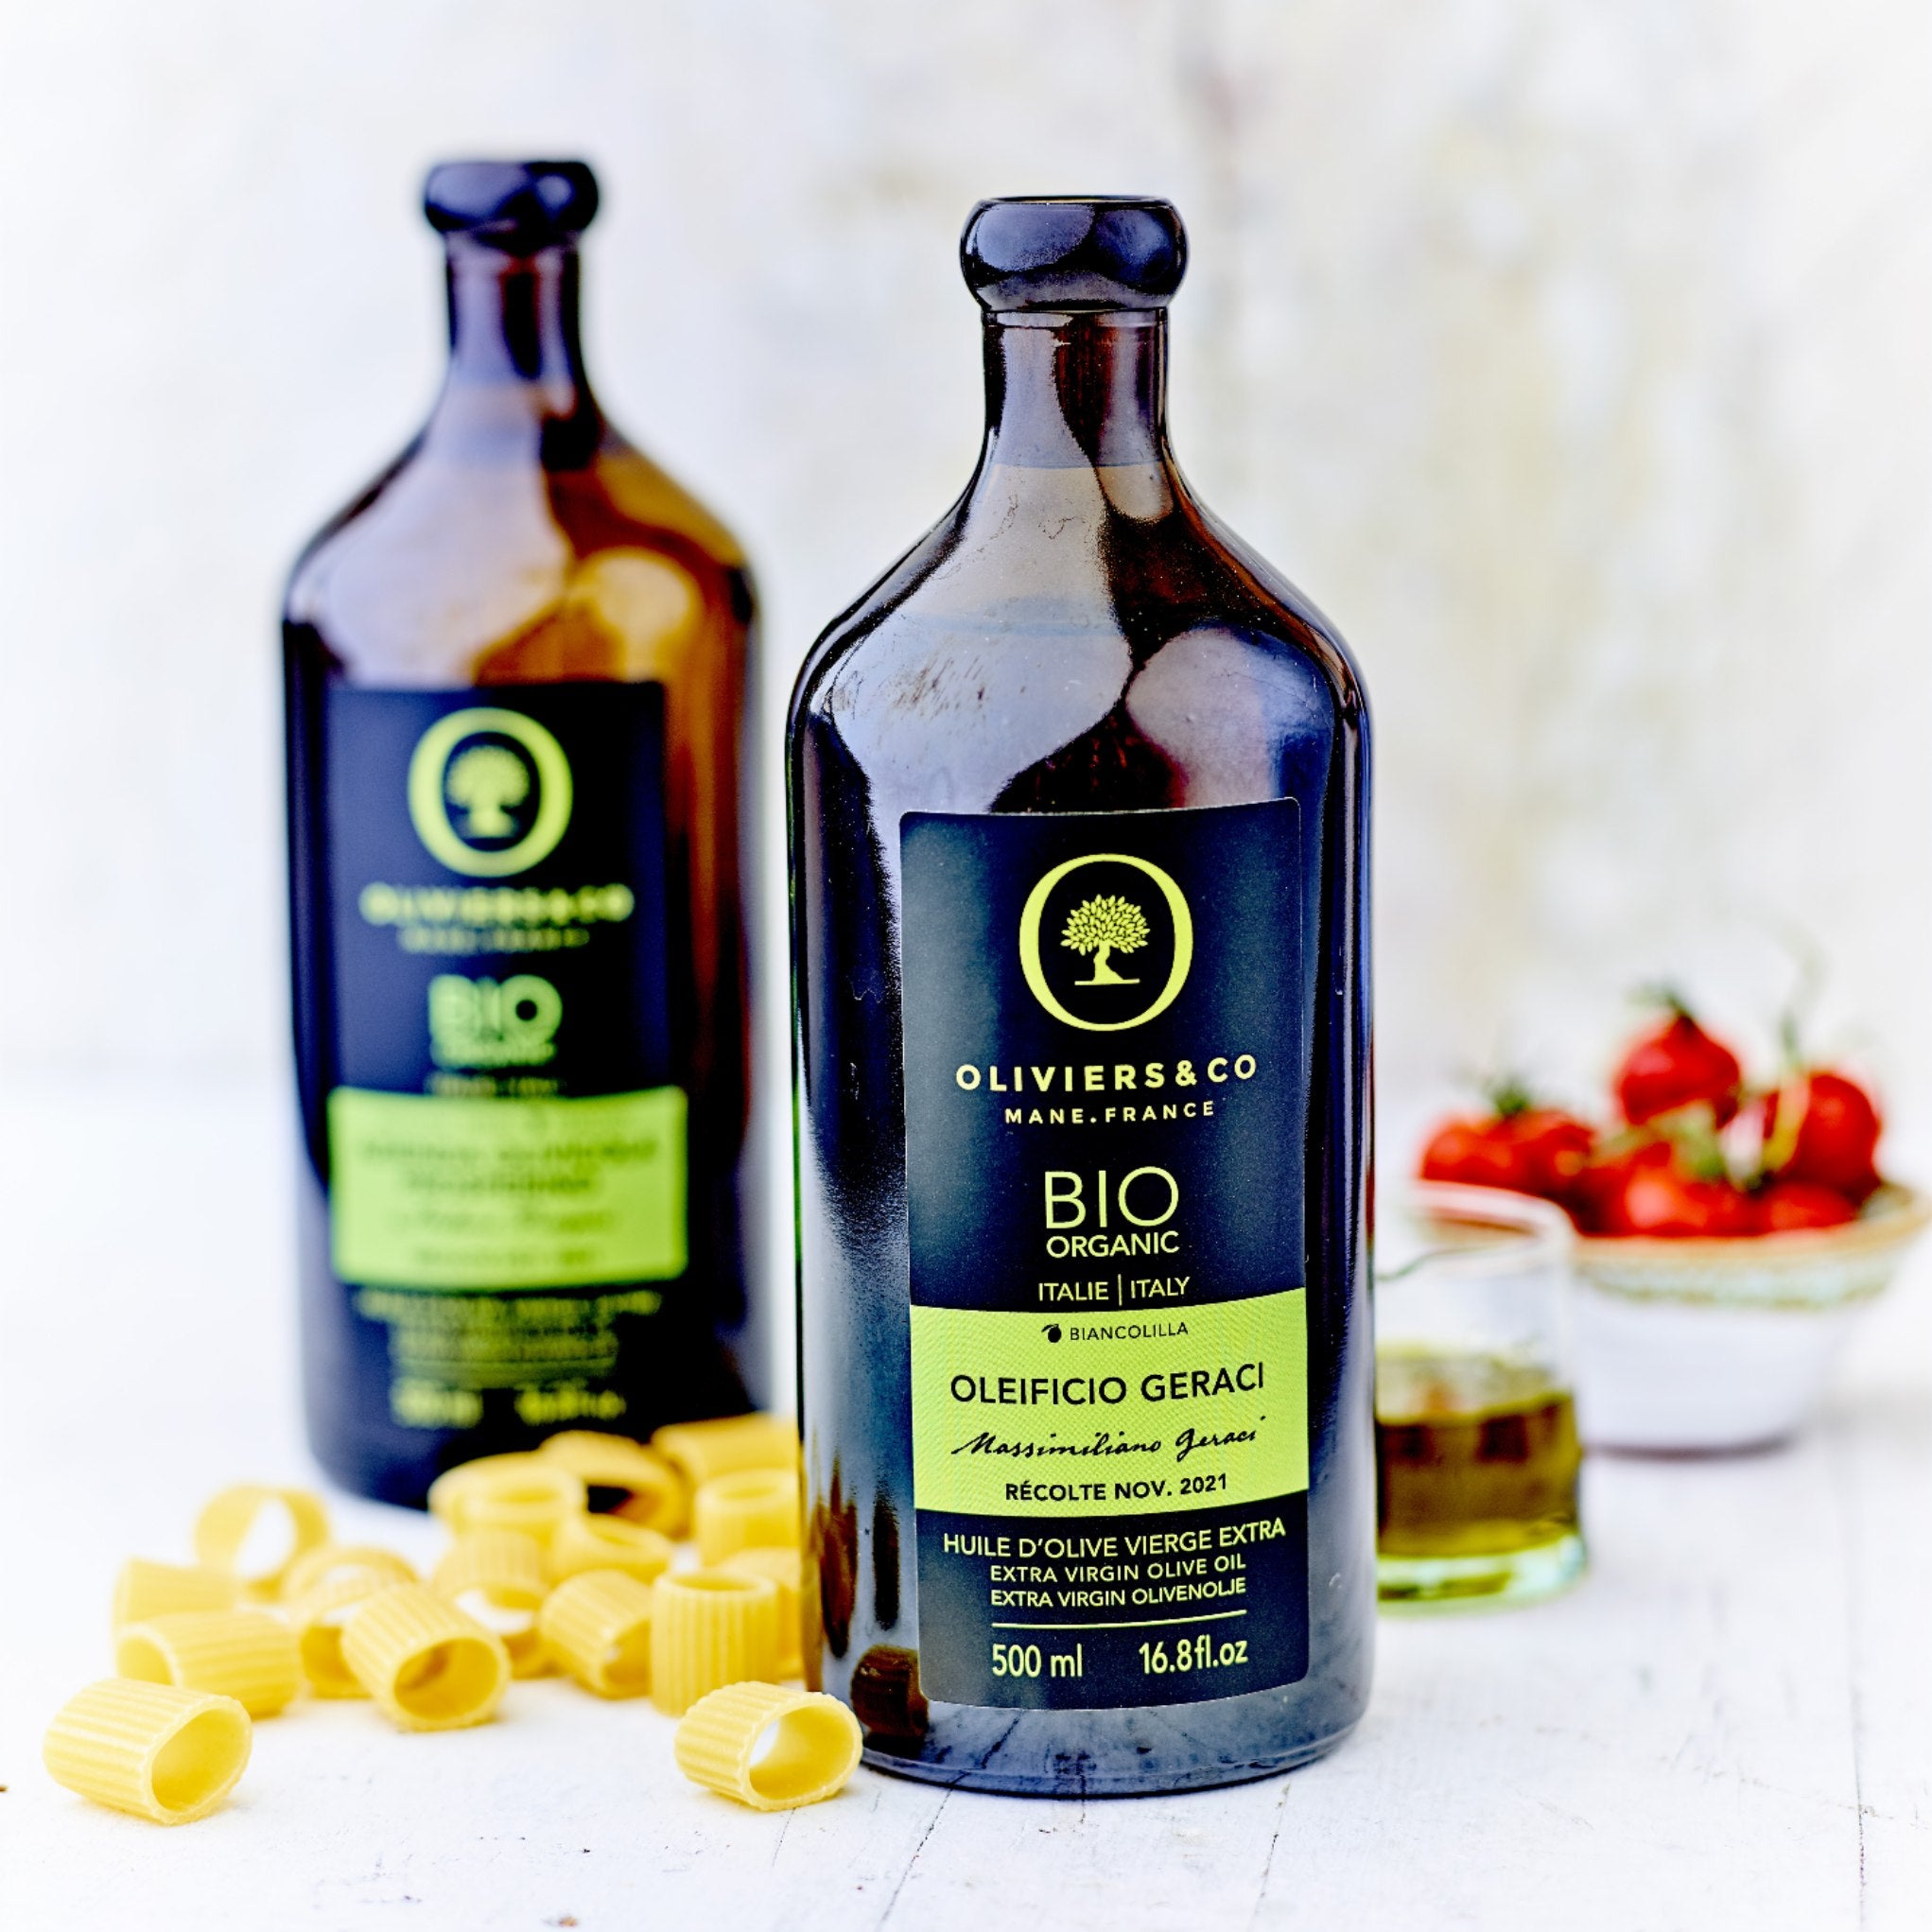 Økologisk Oleificio Geraci italiensk ekstra jomfru olivenolie fra Oliviers & Co